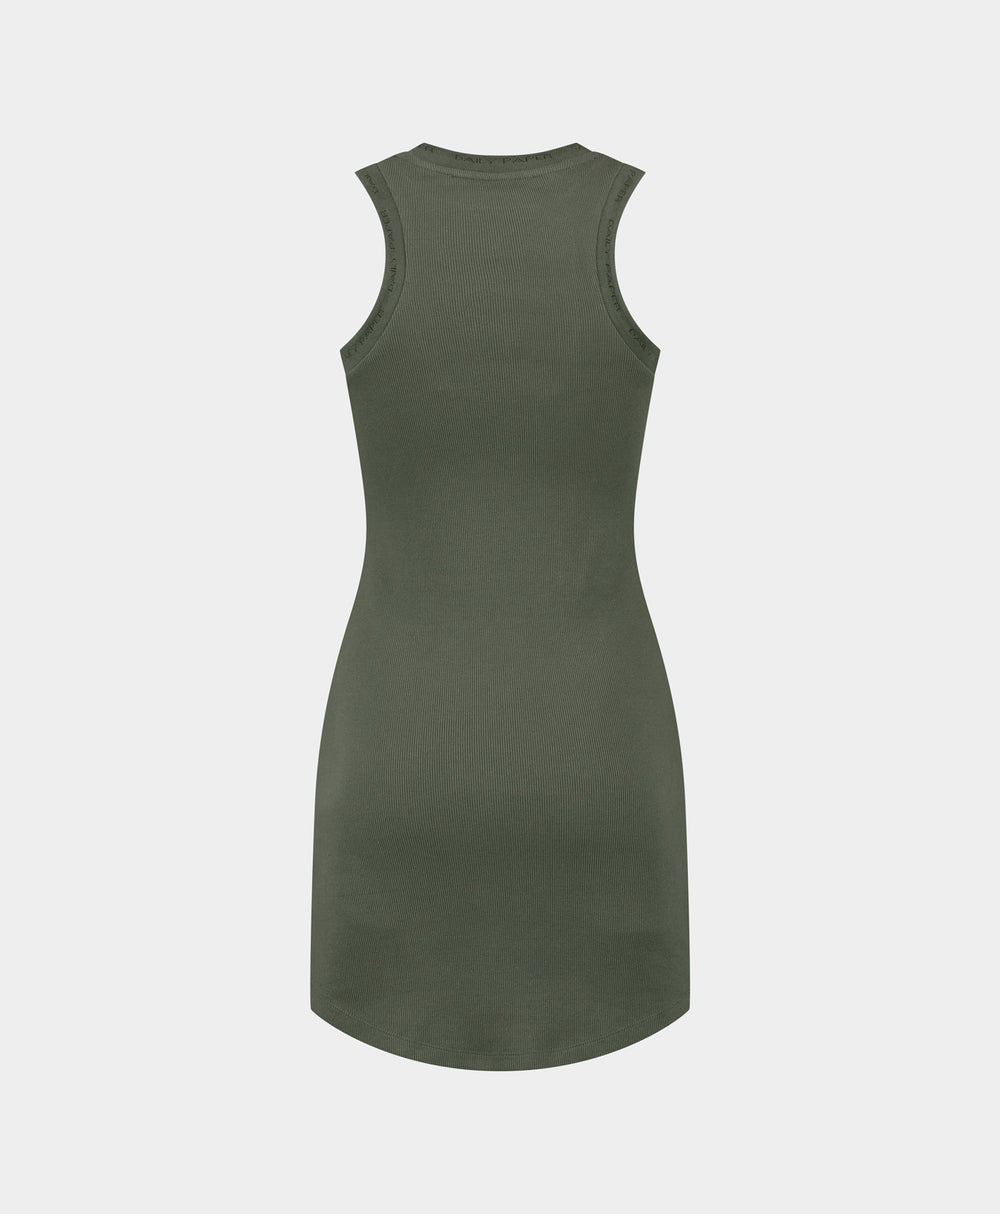 DP - Chimera Green Erib Tank Dress - Packshot - Rear